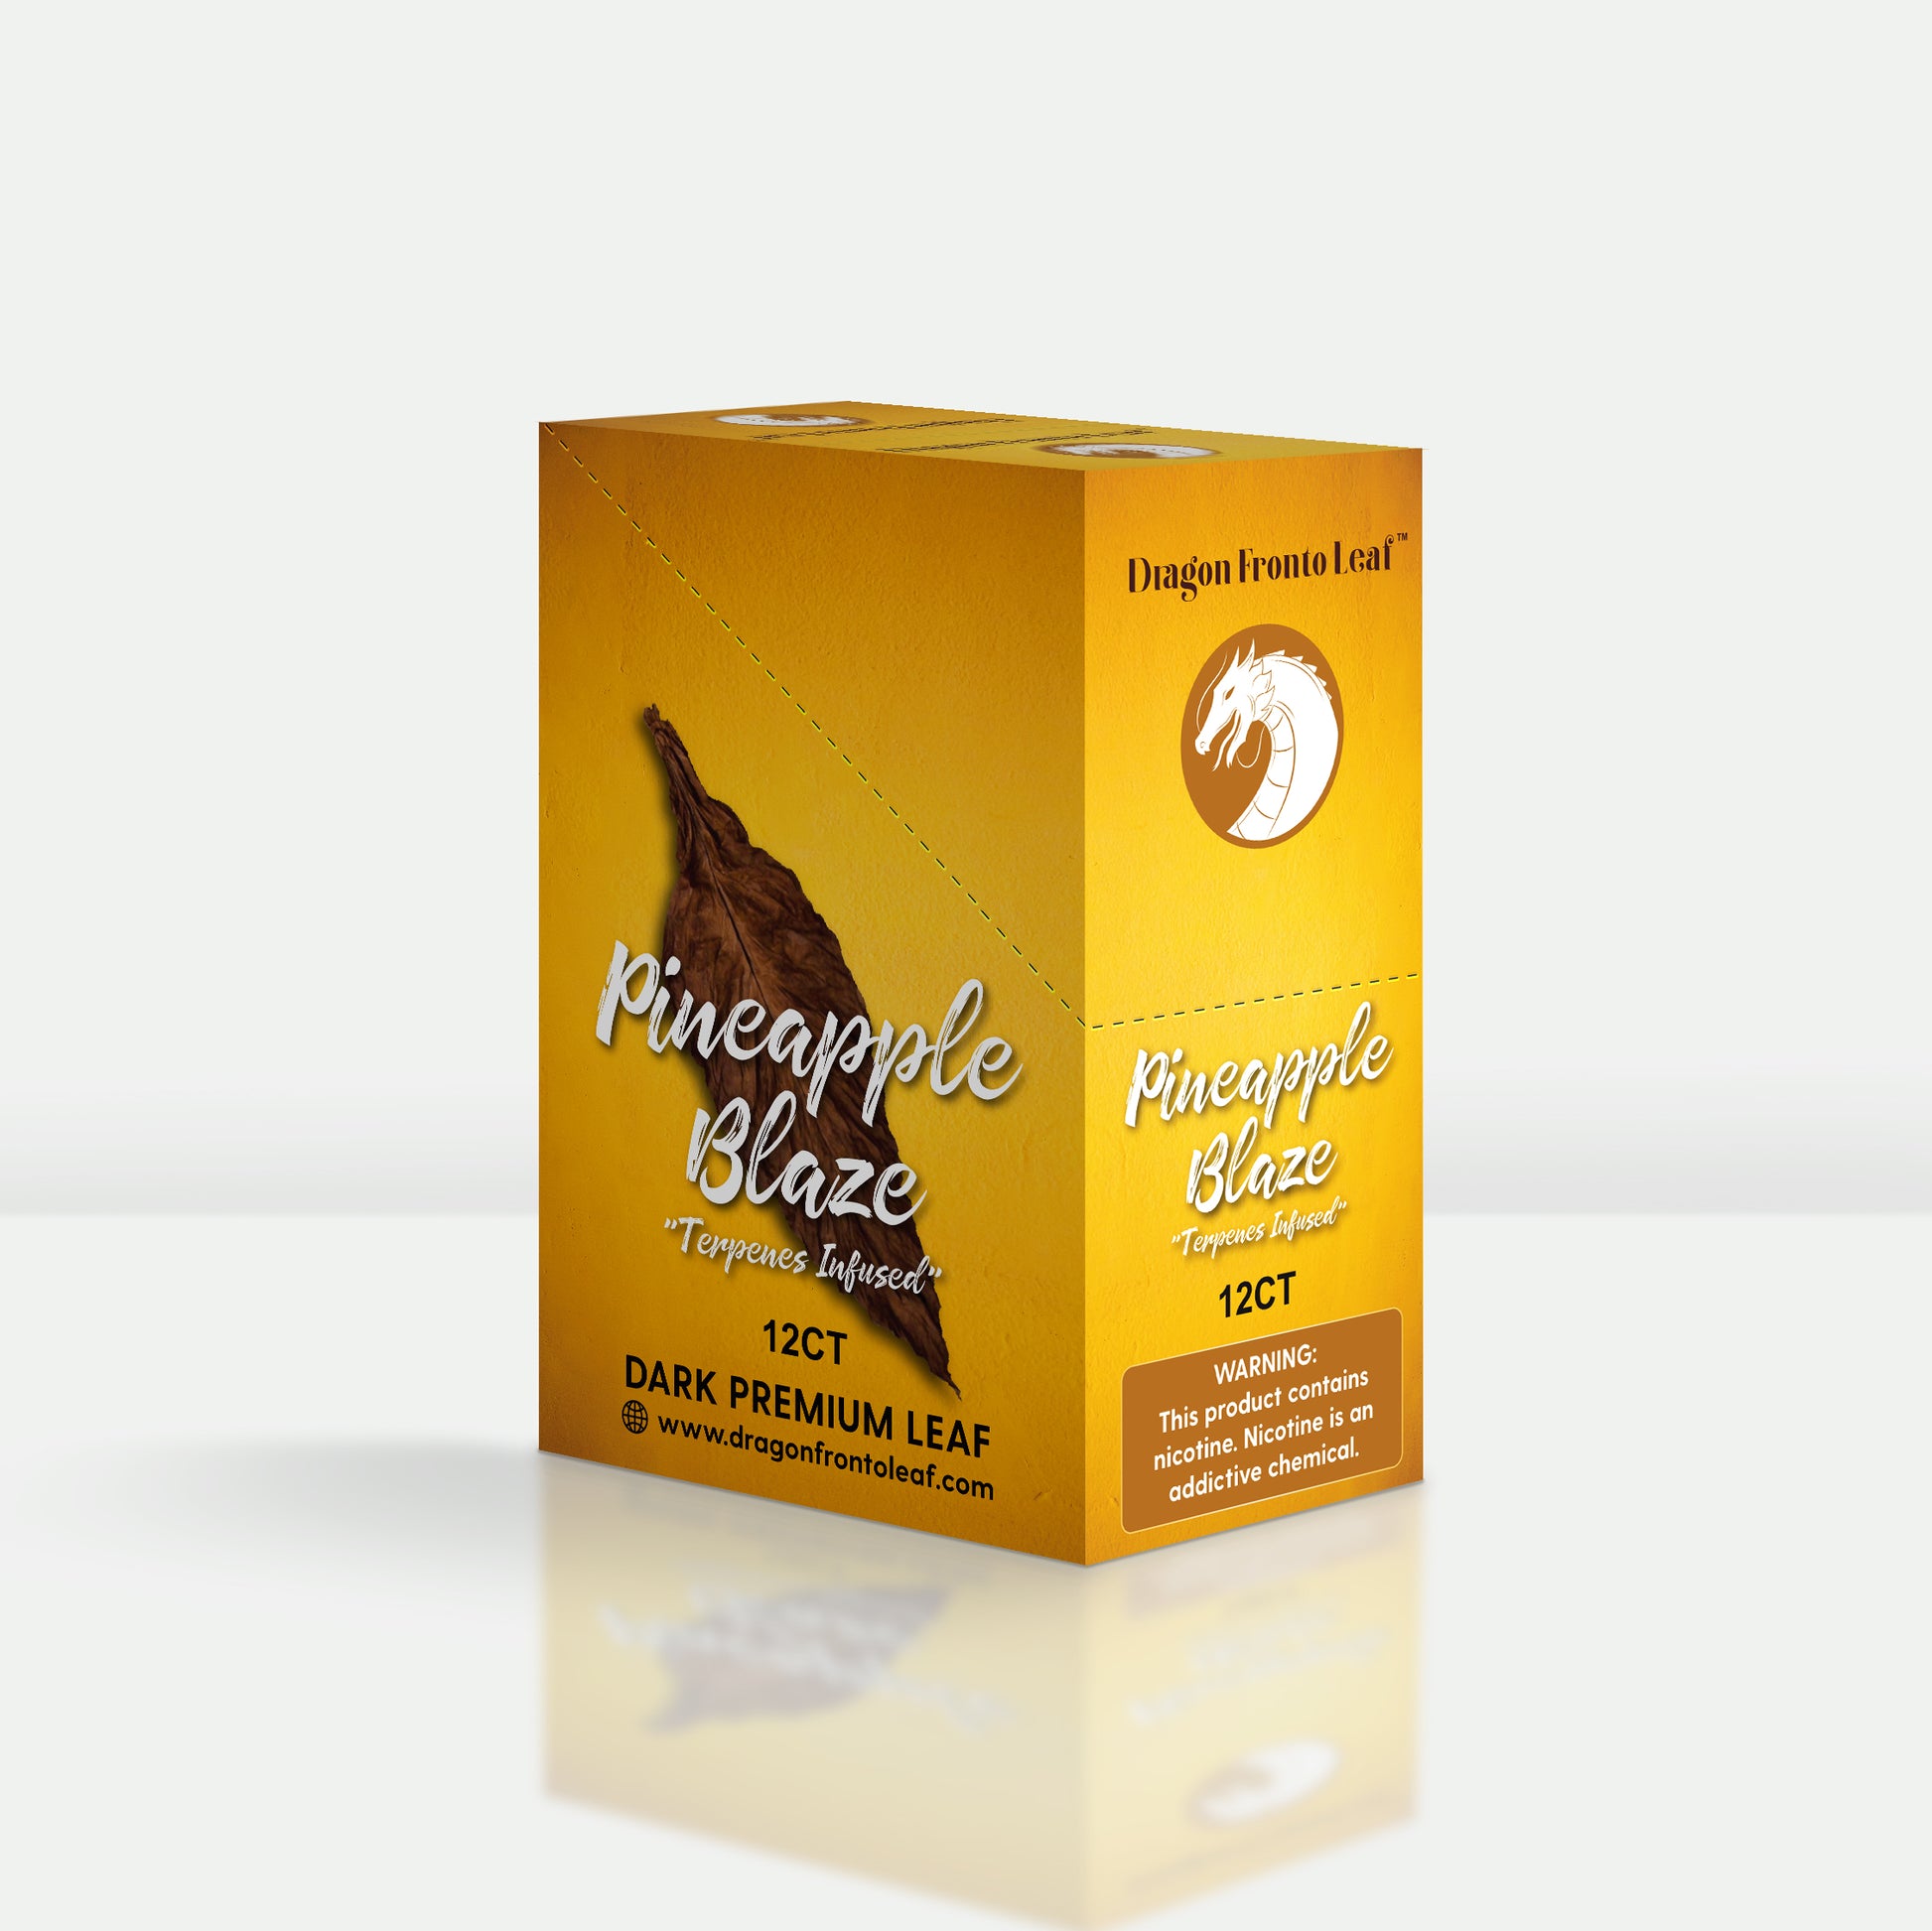 Pineapple Blaze Dragon Fronto Leaf Dark Premium Tobacco Leaf Box